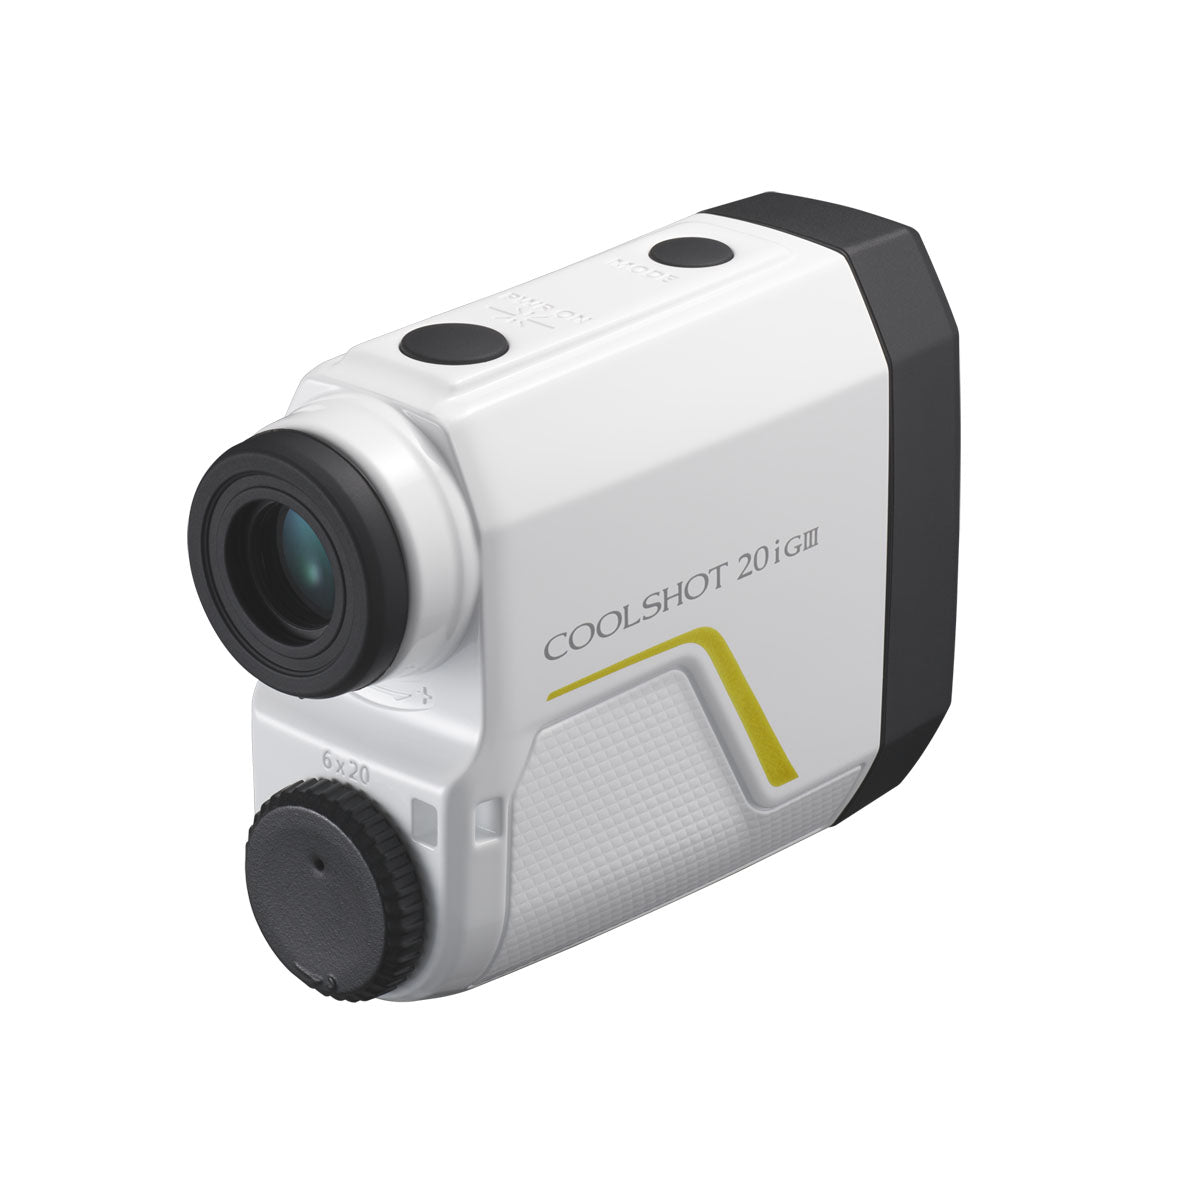 Nikon Coolshot 20I GIII Golf Laser Rangefinder 5-730m